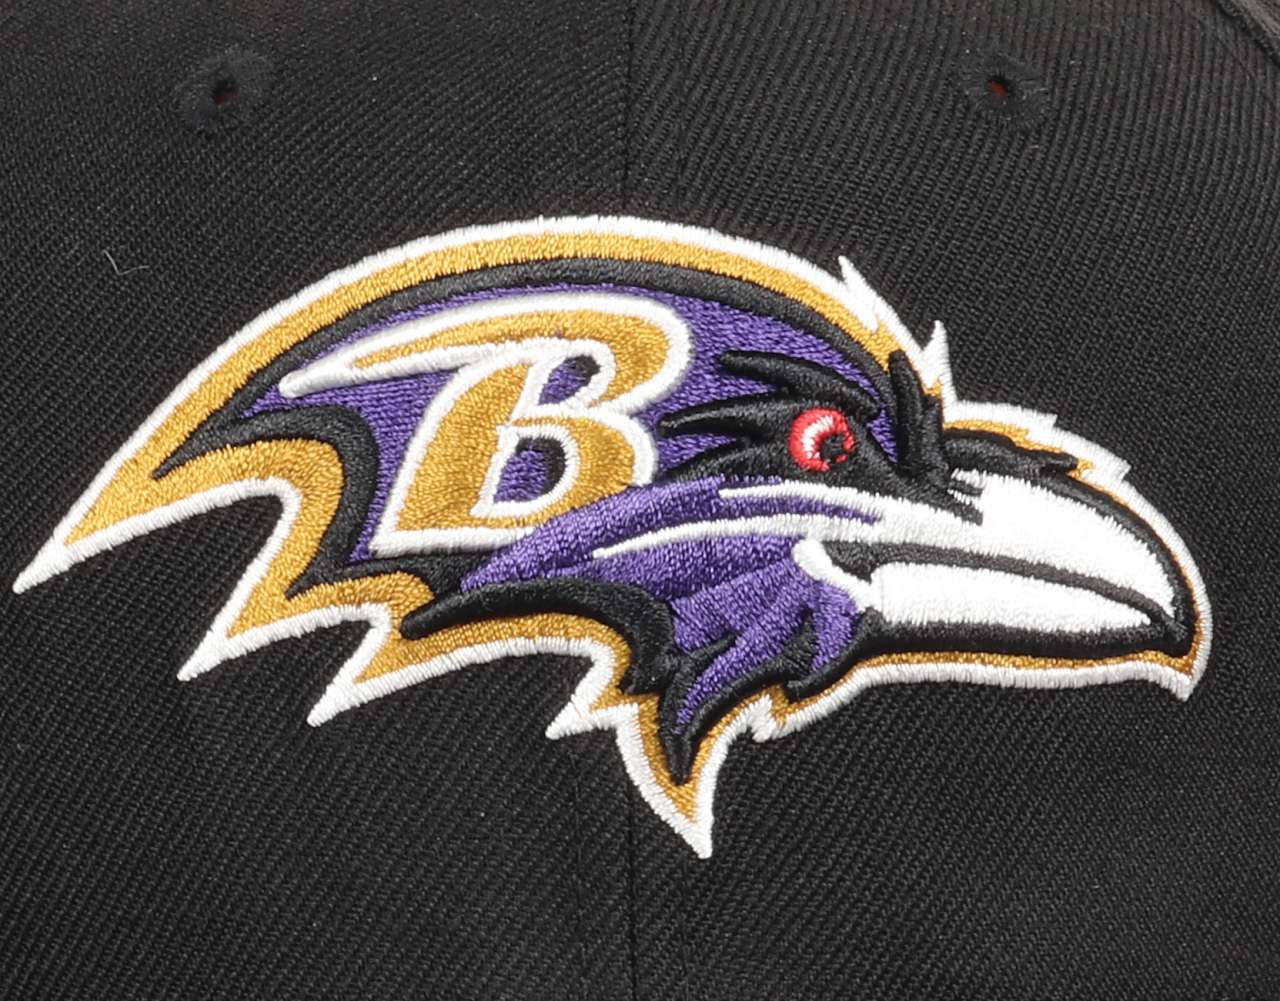 Baltimore Ravens NFL Black 9Fifty Original Fit Snapback Cap New Era